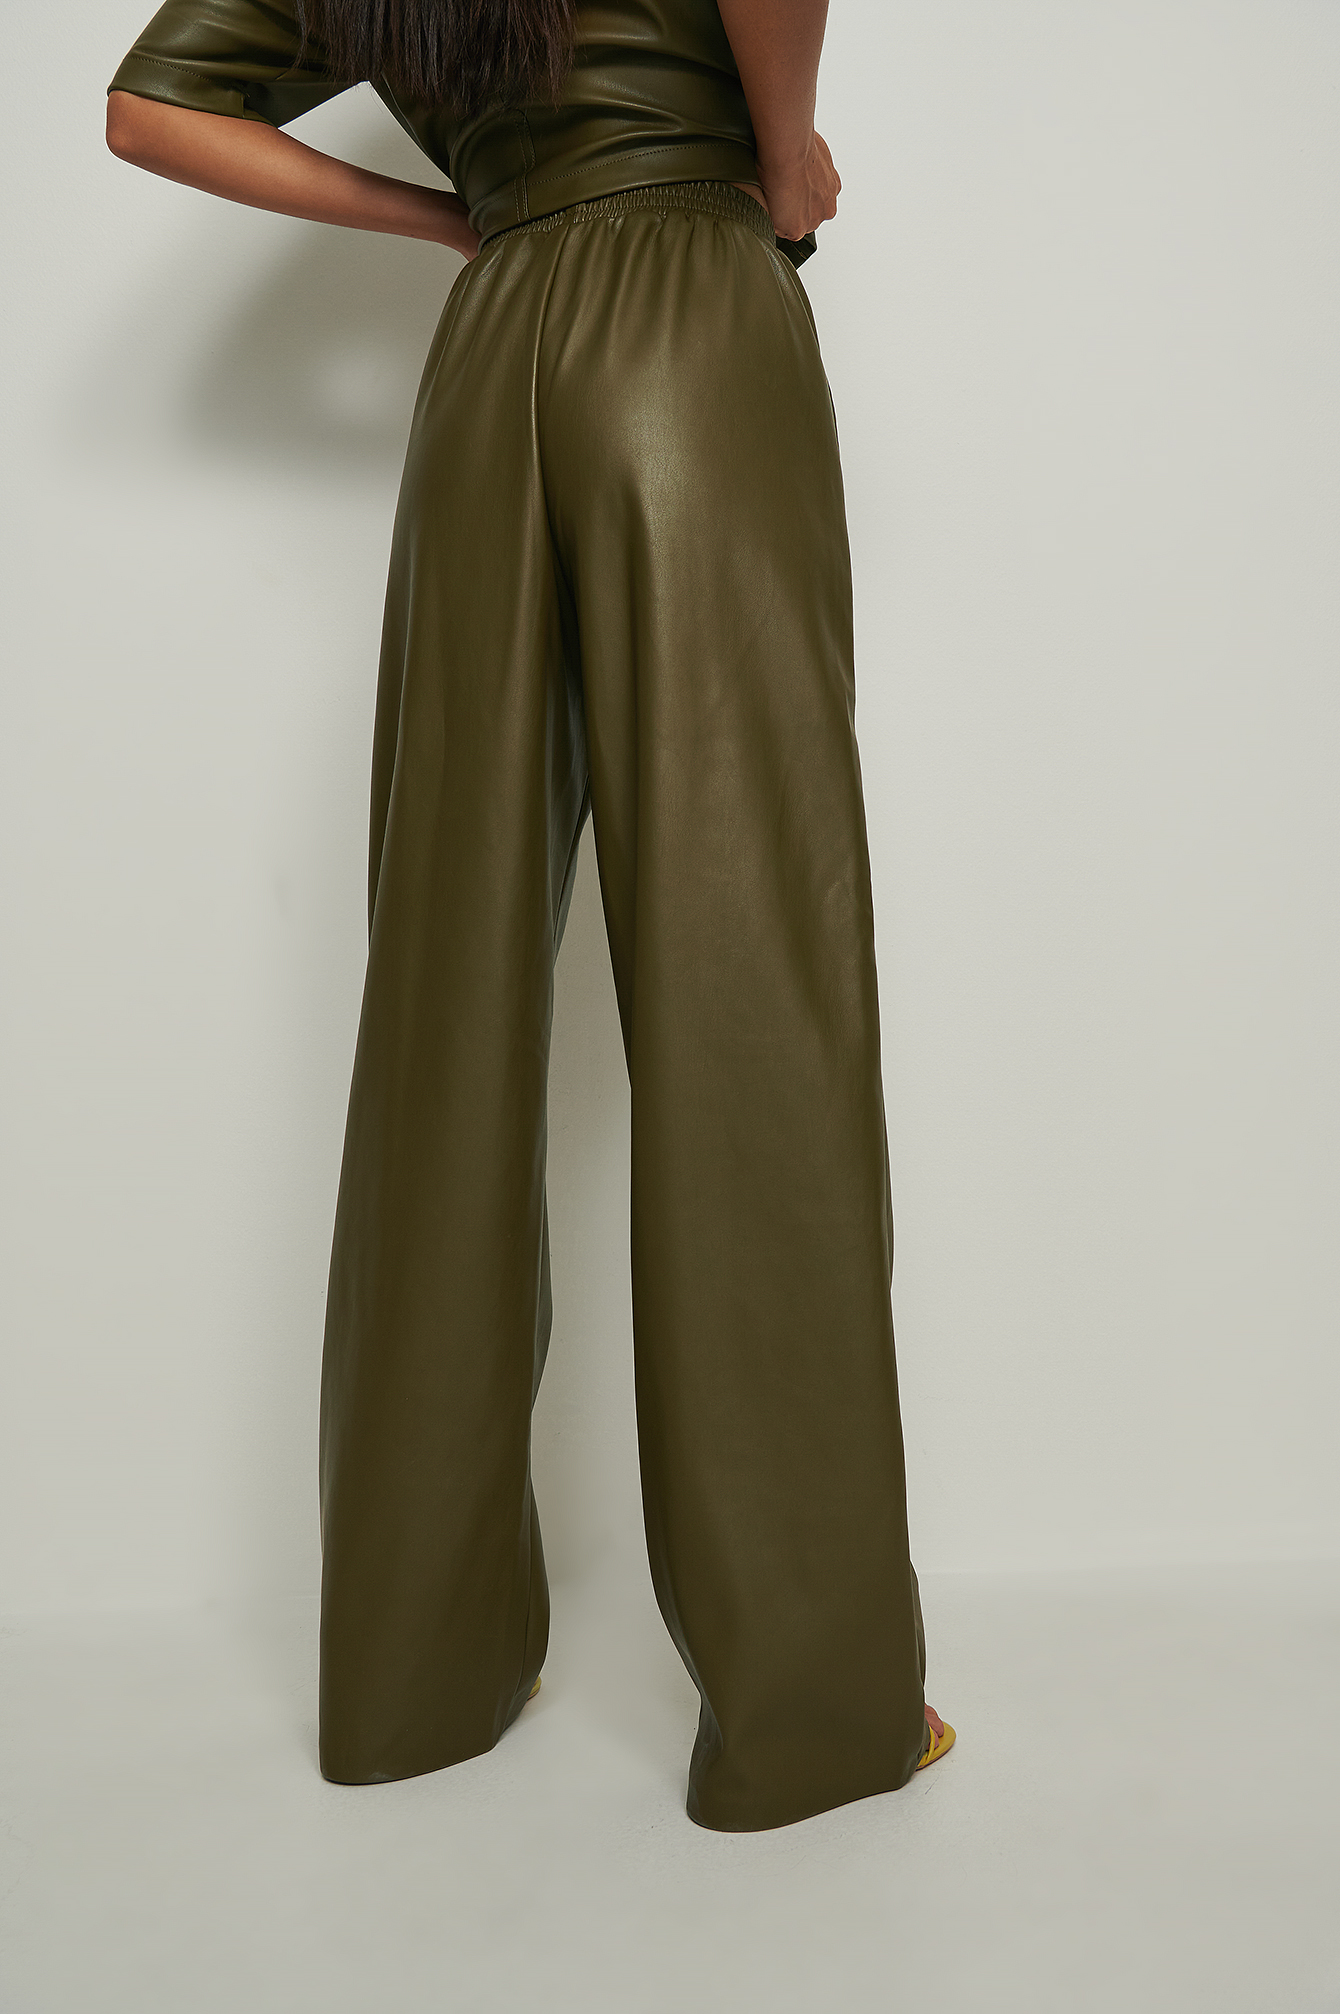 Olive Elastic Waist PU Trousers